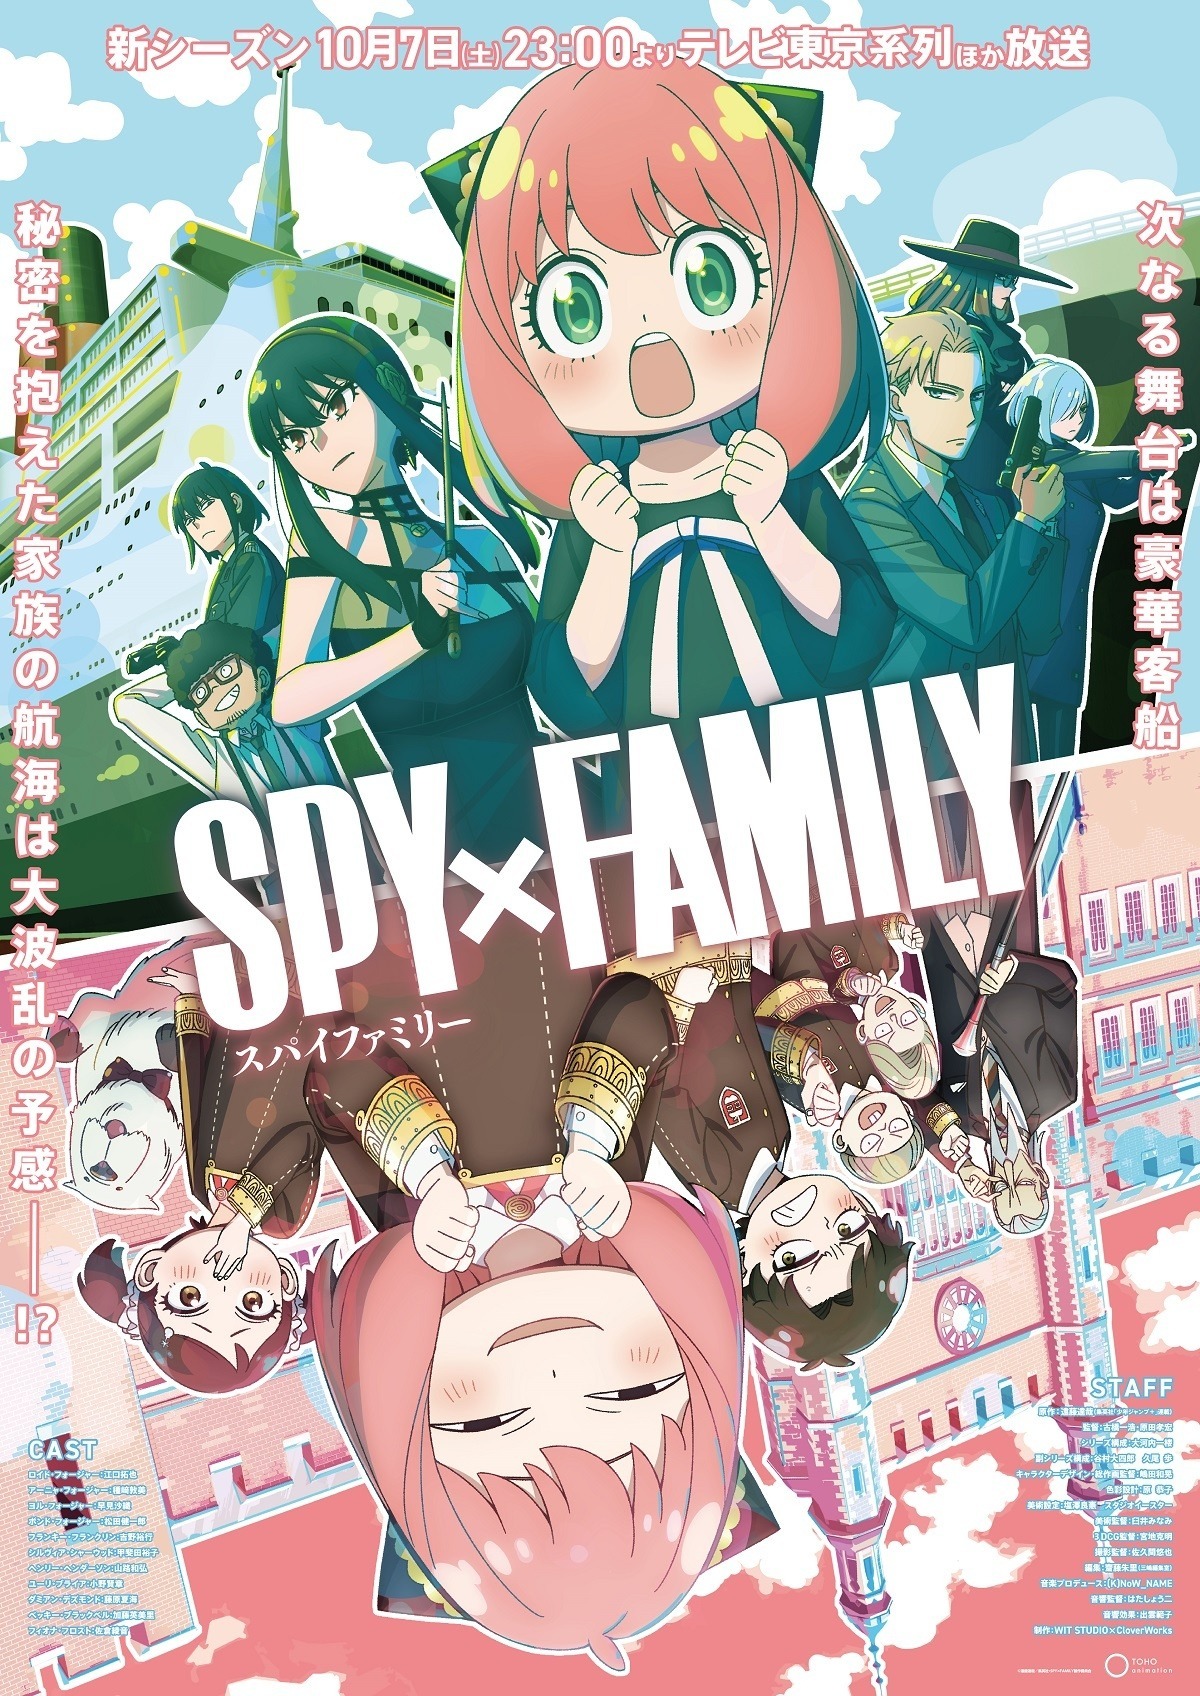 Spy x Family Season 2 and CODE: White Anime film set for release